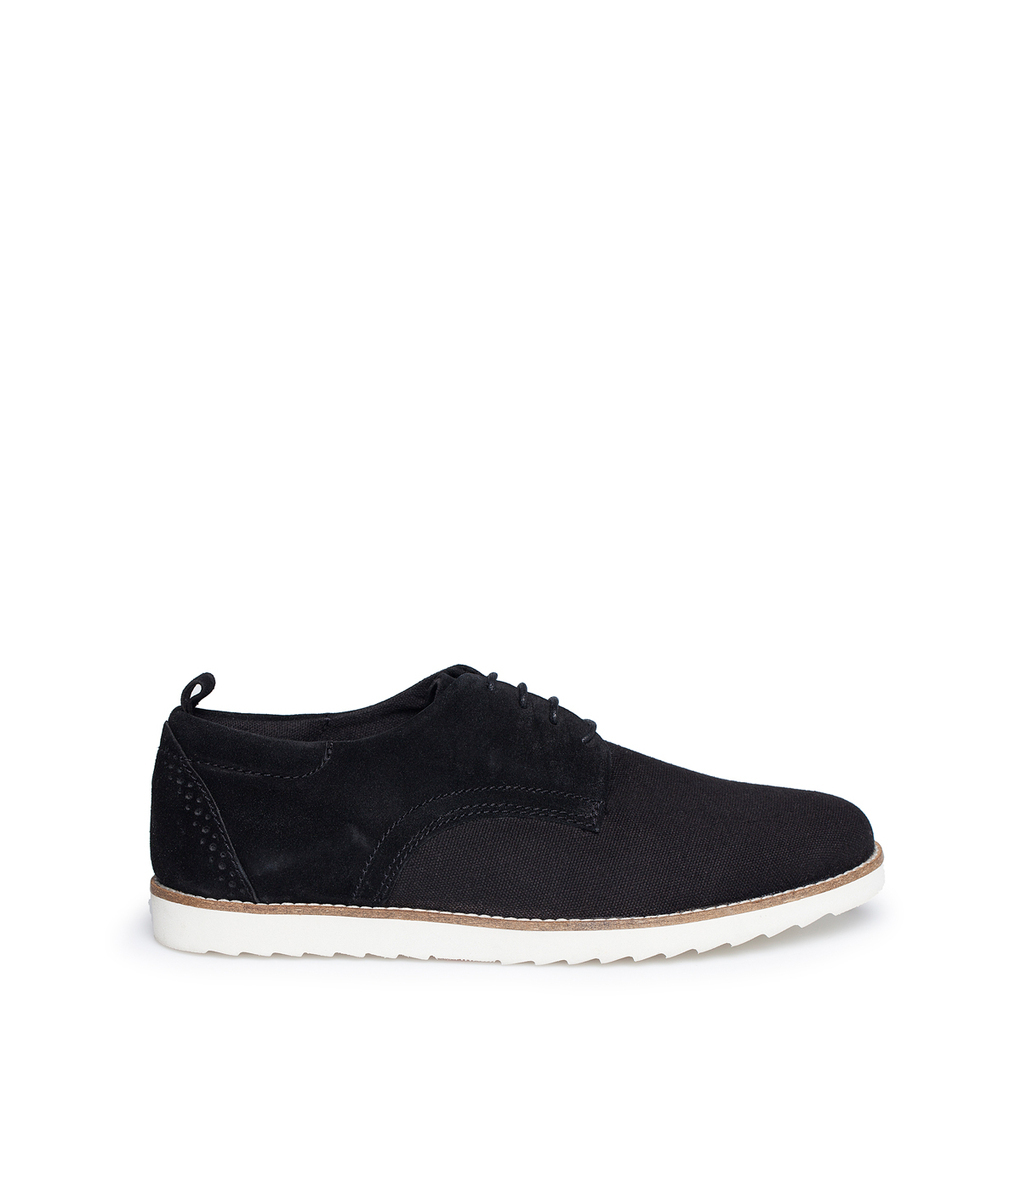 Springfield fekete velúr casual cipő 2015 fotója